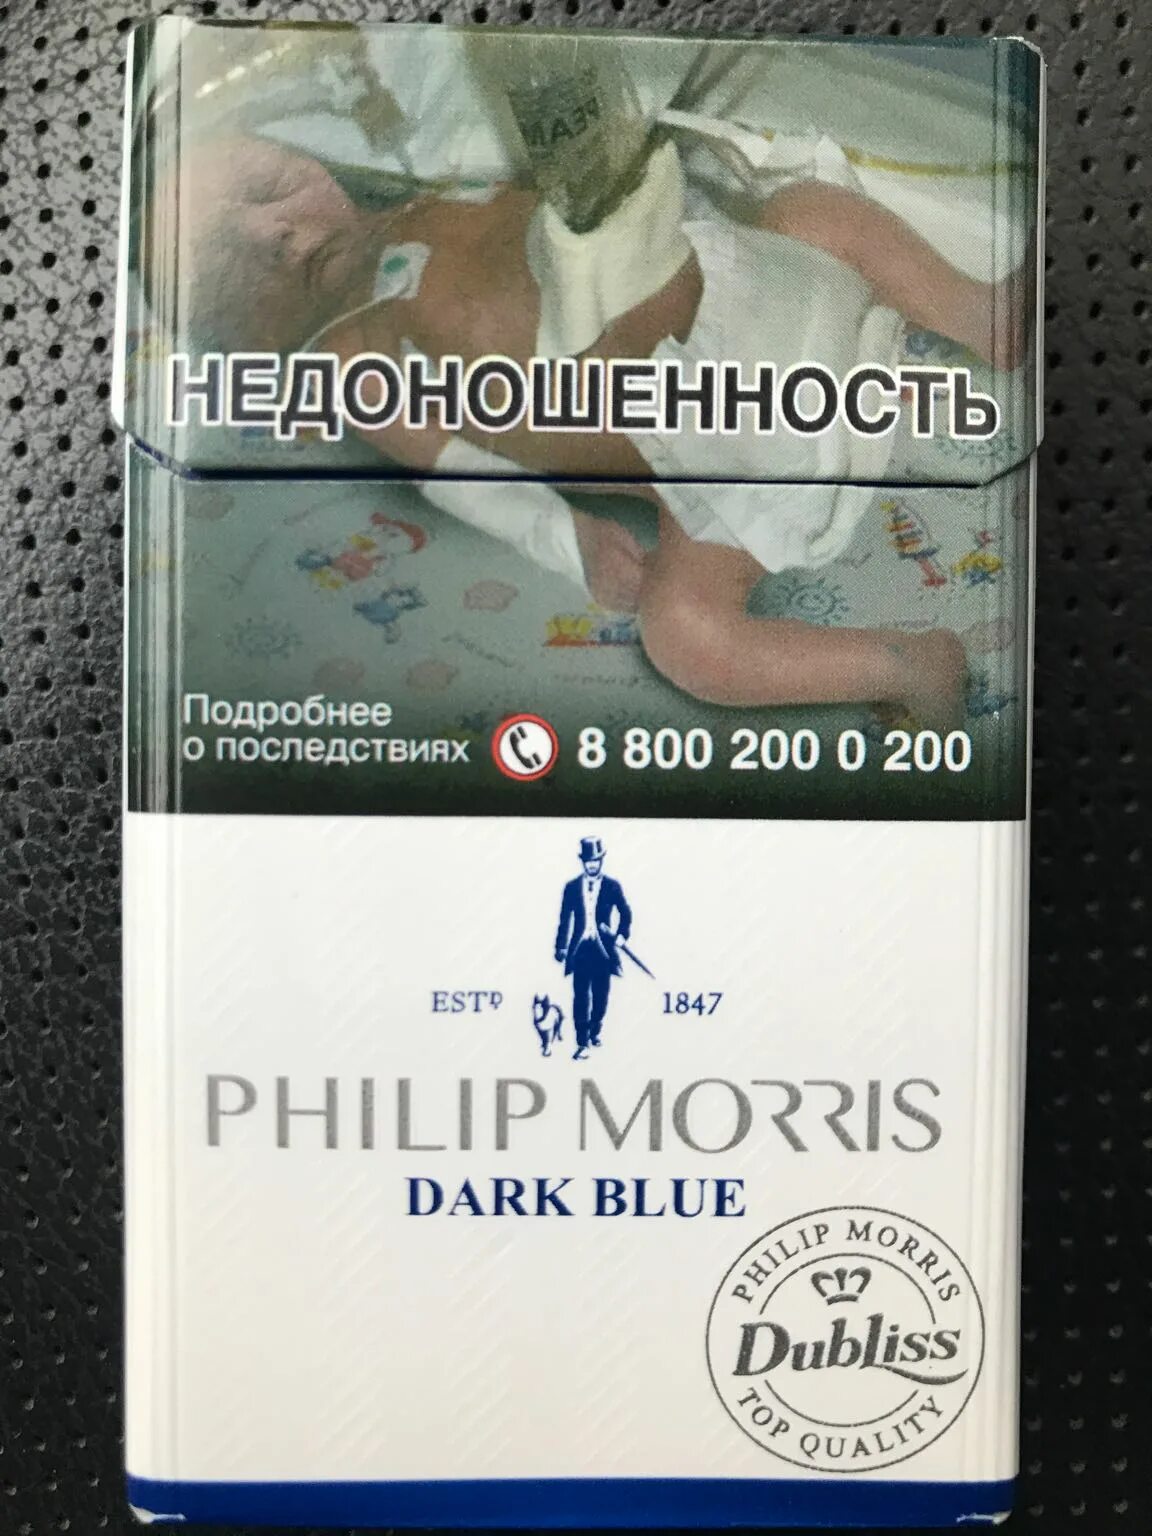 Филип Моррис Блю (Philip Morris Blu). Сигареты Philip Morris Dark Blue. Филлип моррис отзывы